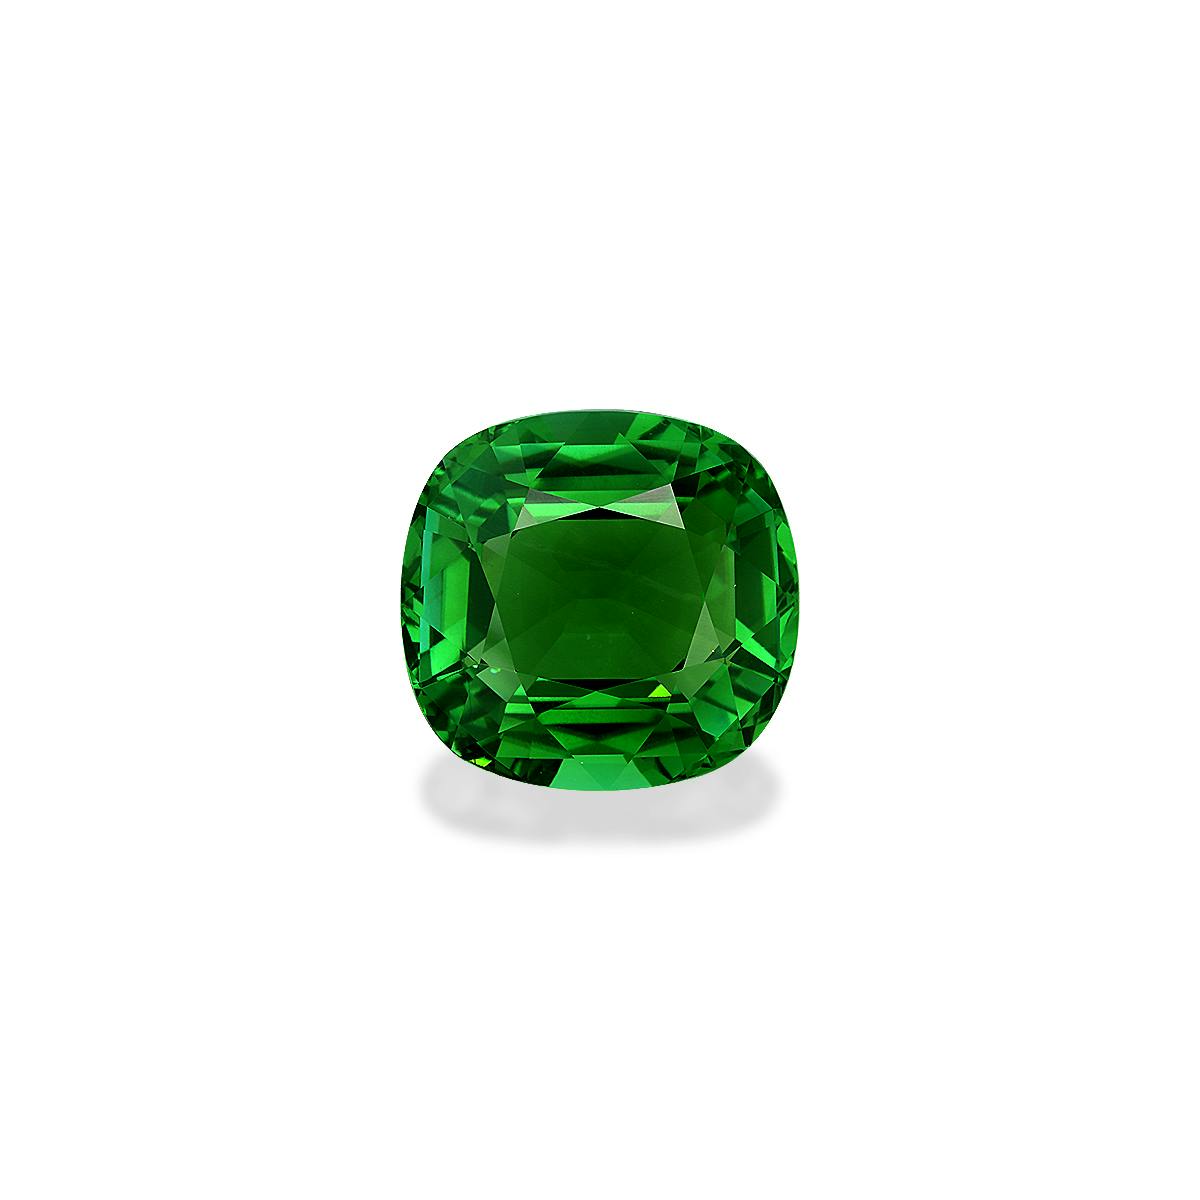 Green Tourmaline 44.21ct (TG1349)